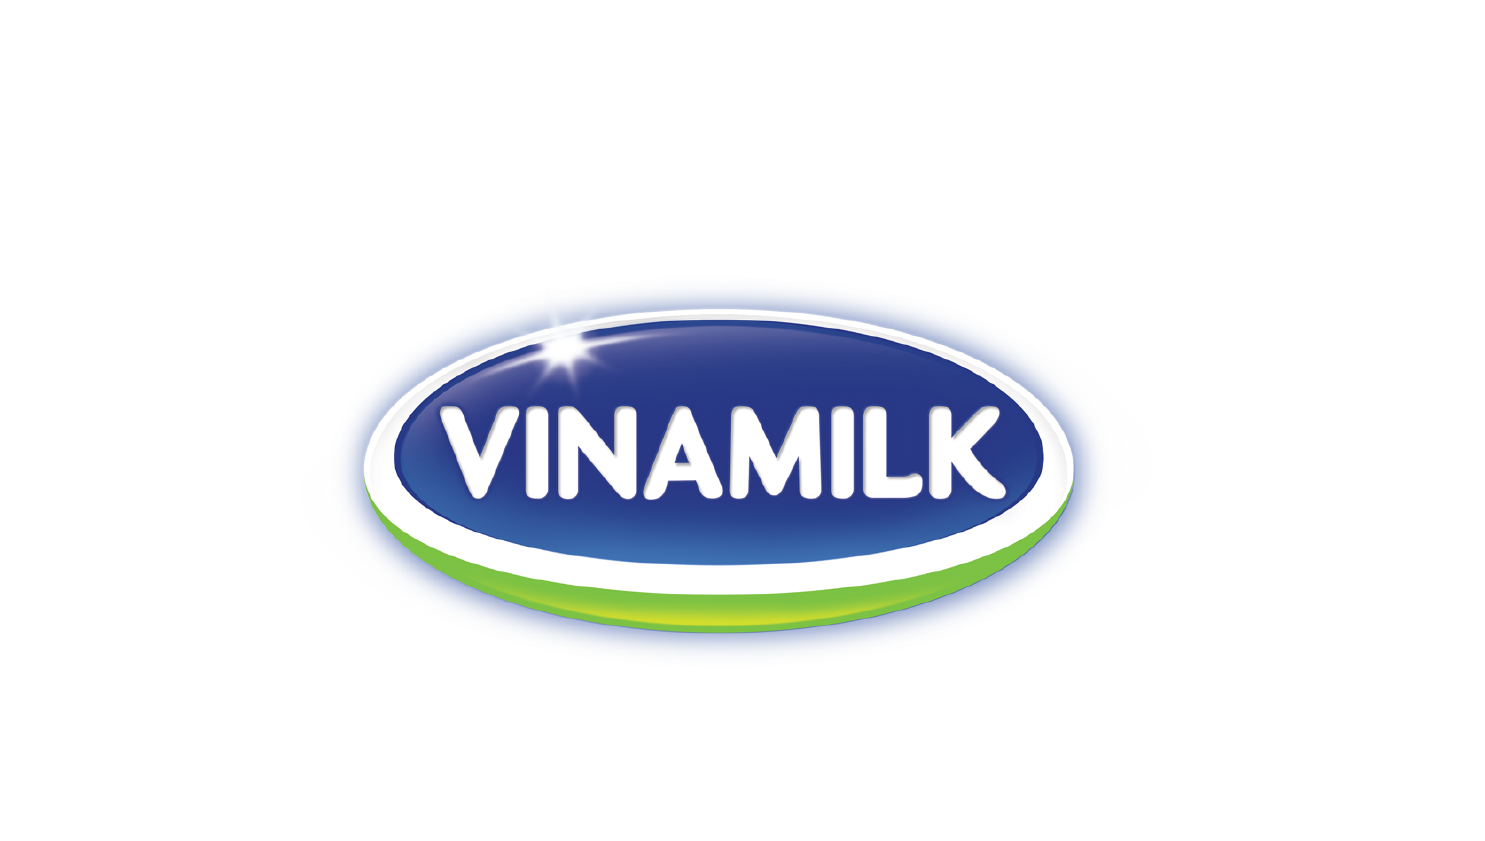 Vinamilk.png - Logo Vinamilk 